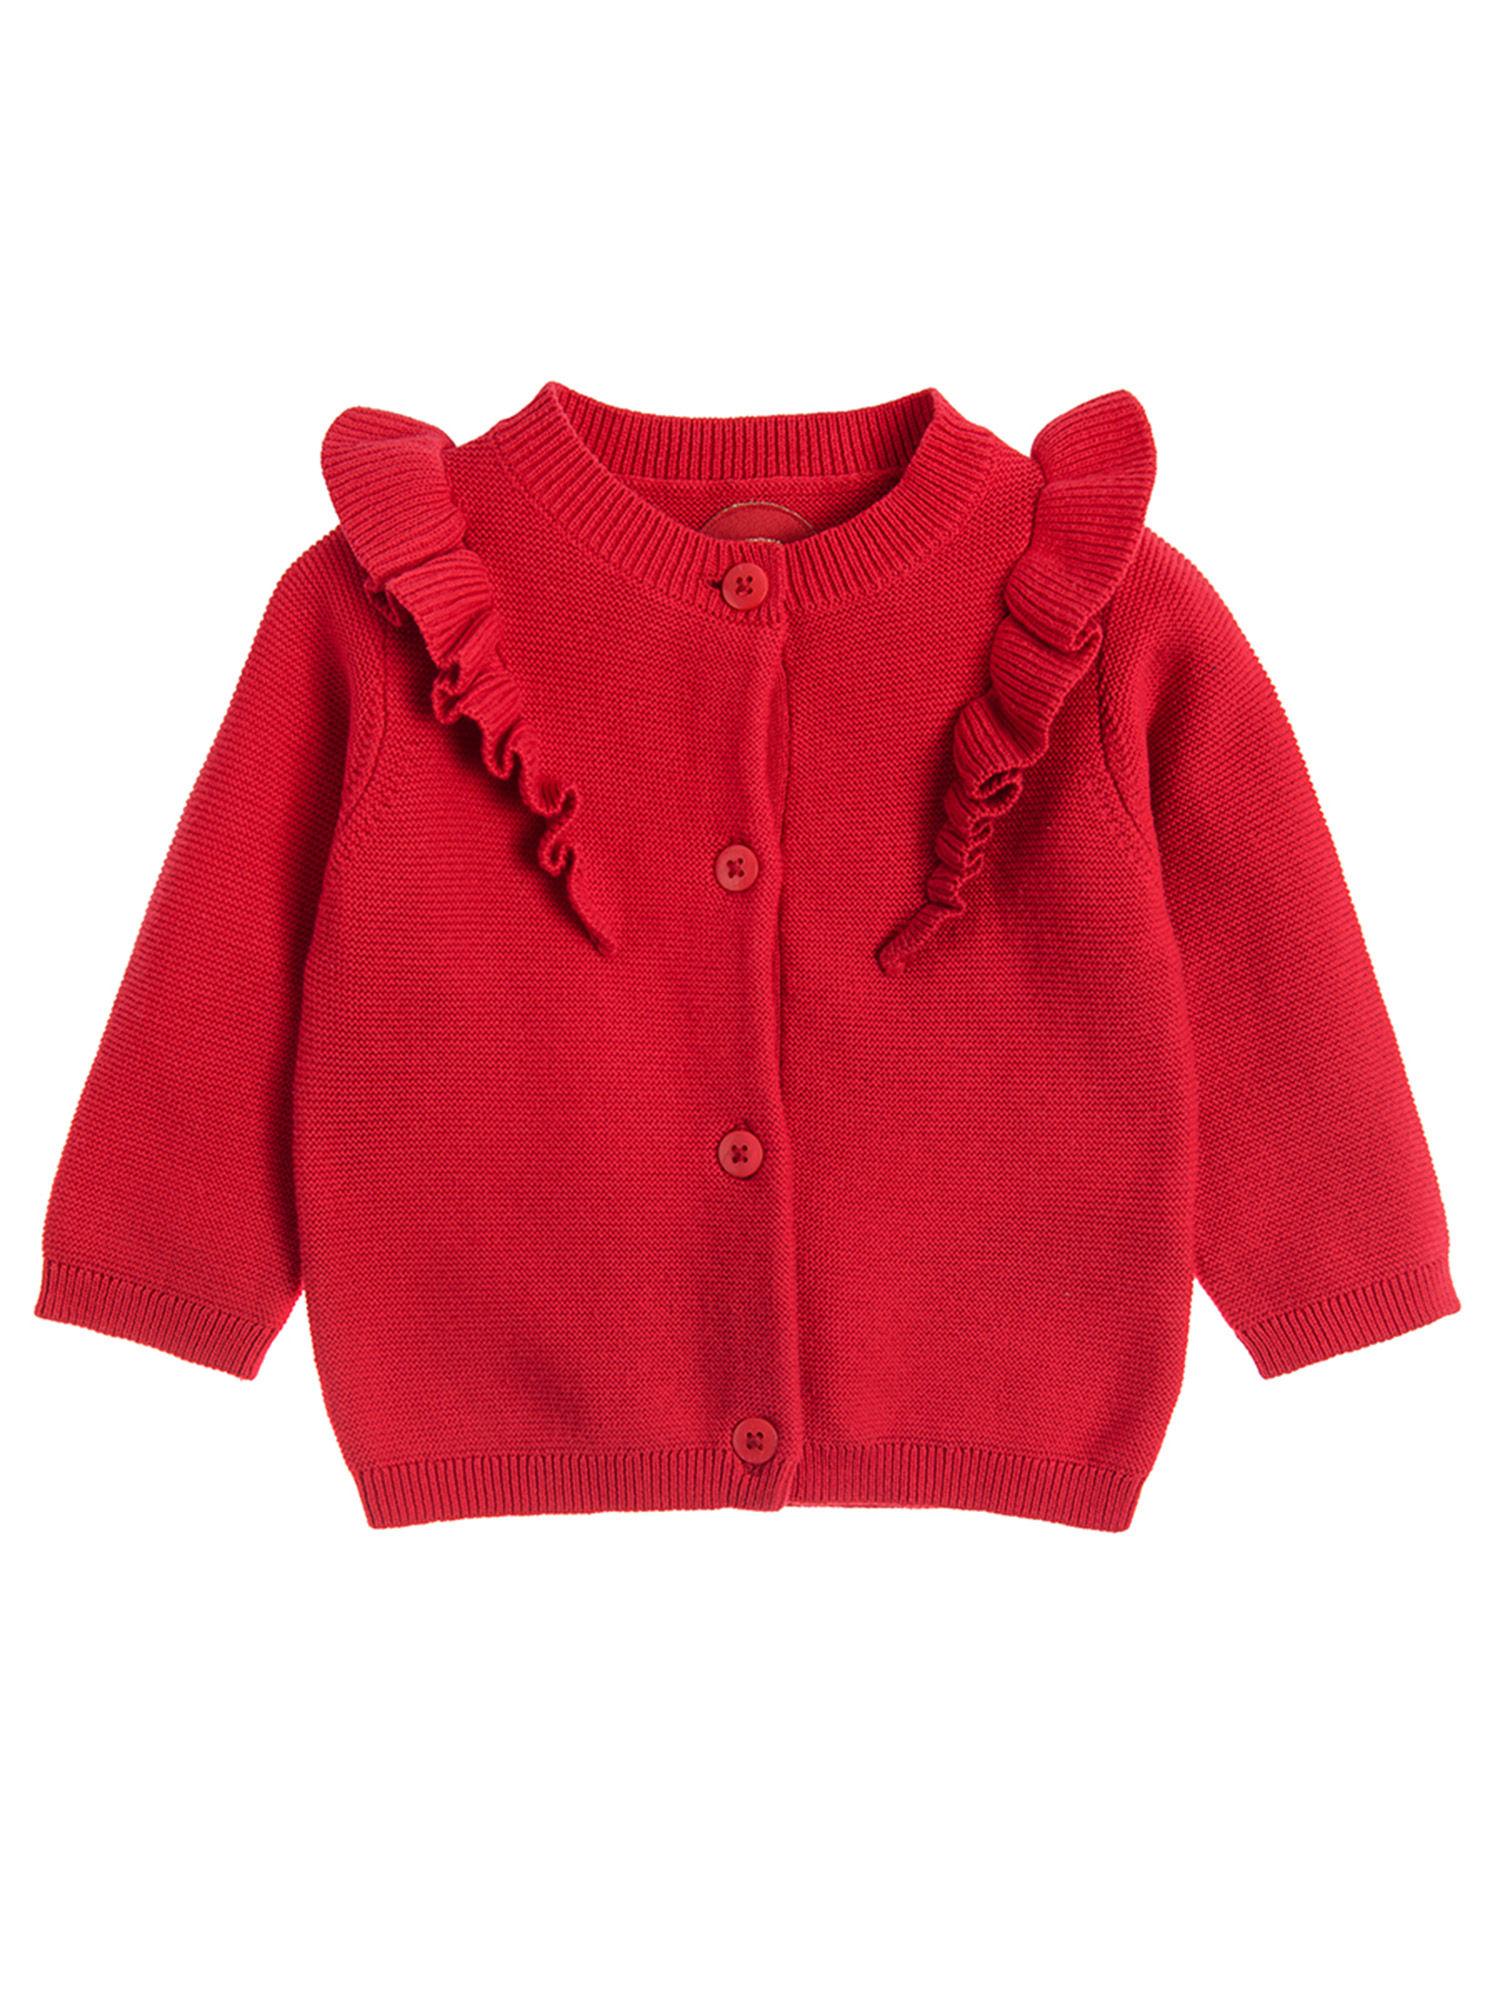 smyk girl red knitted cardigan